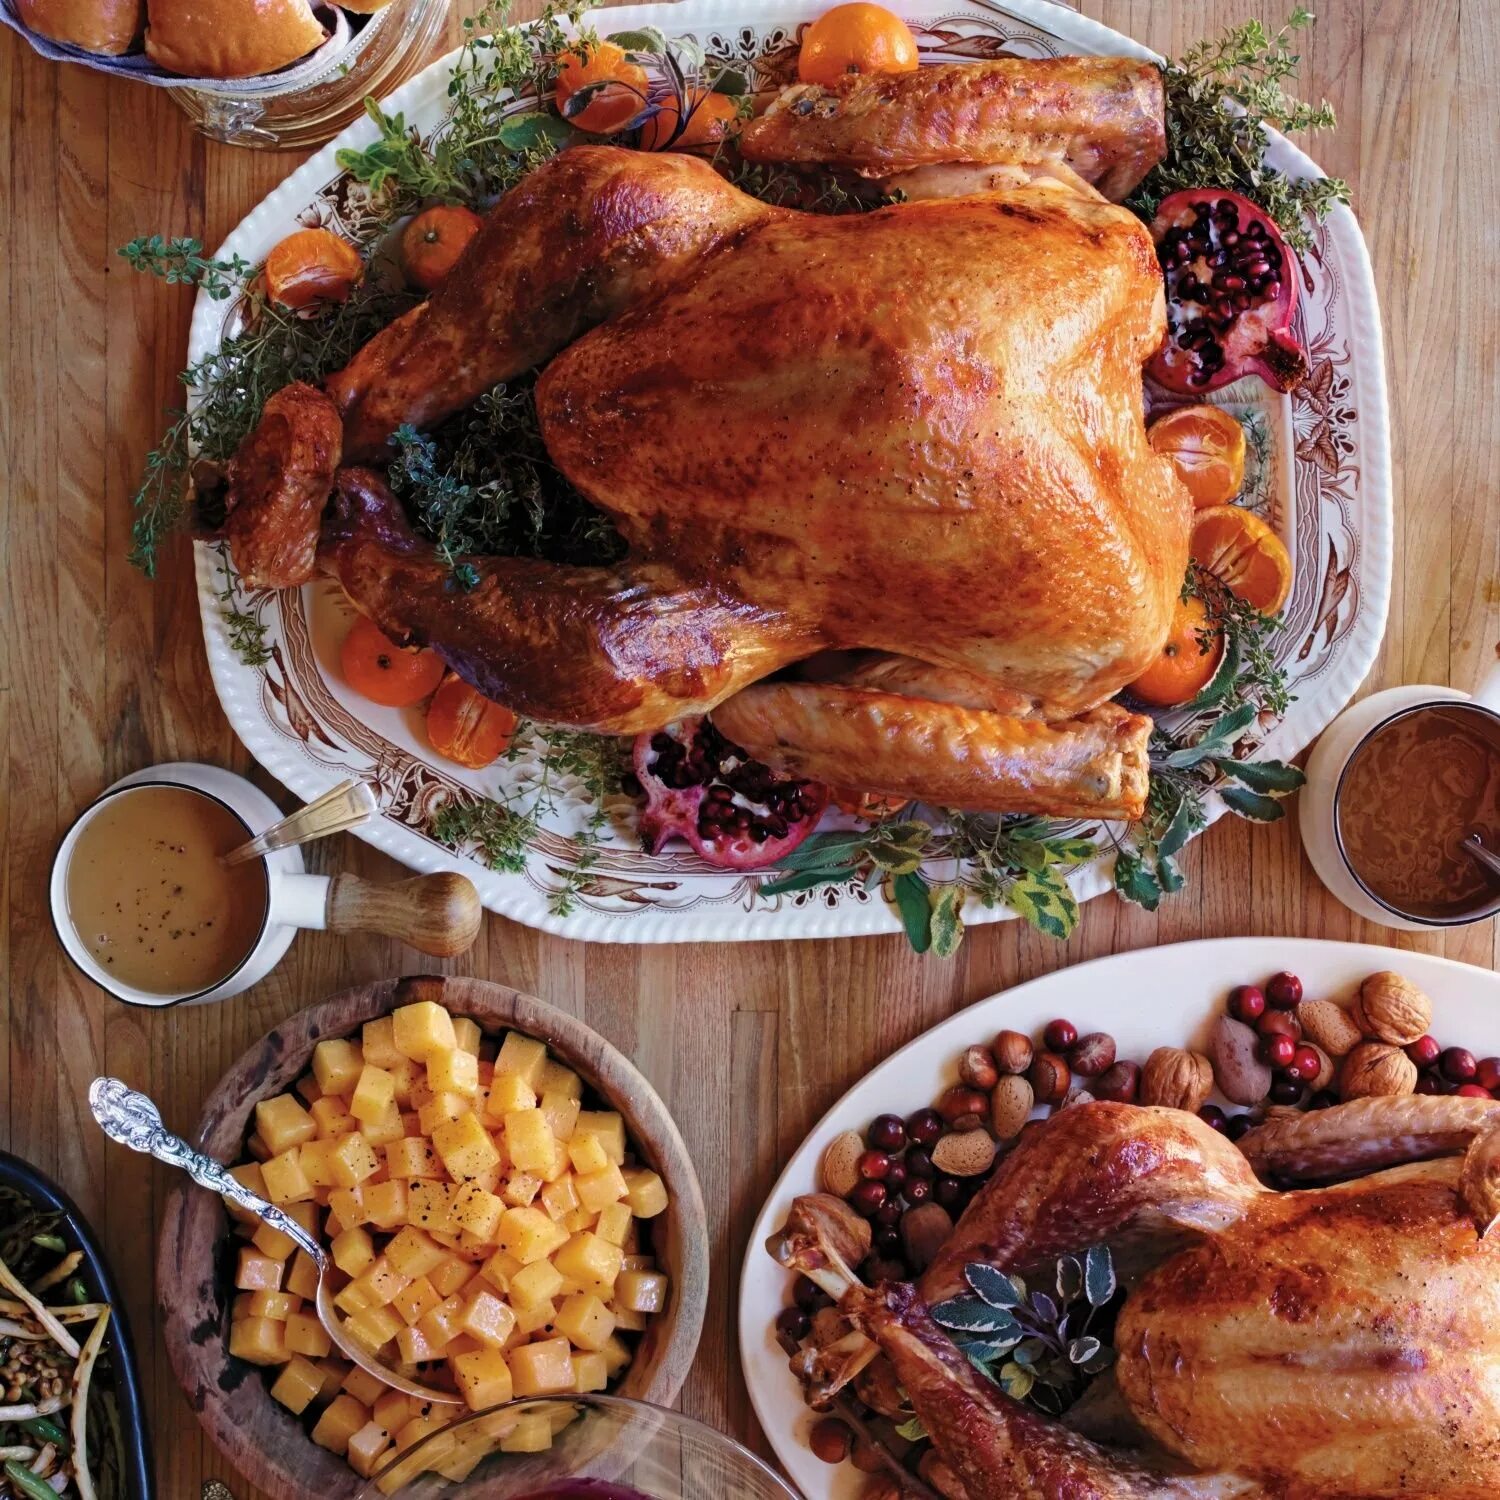 Thanksgiving turkey. День Благодарения еда. Индейка на день Благодарения. Блюда на обед индейка. Индейка Америка.